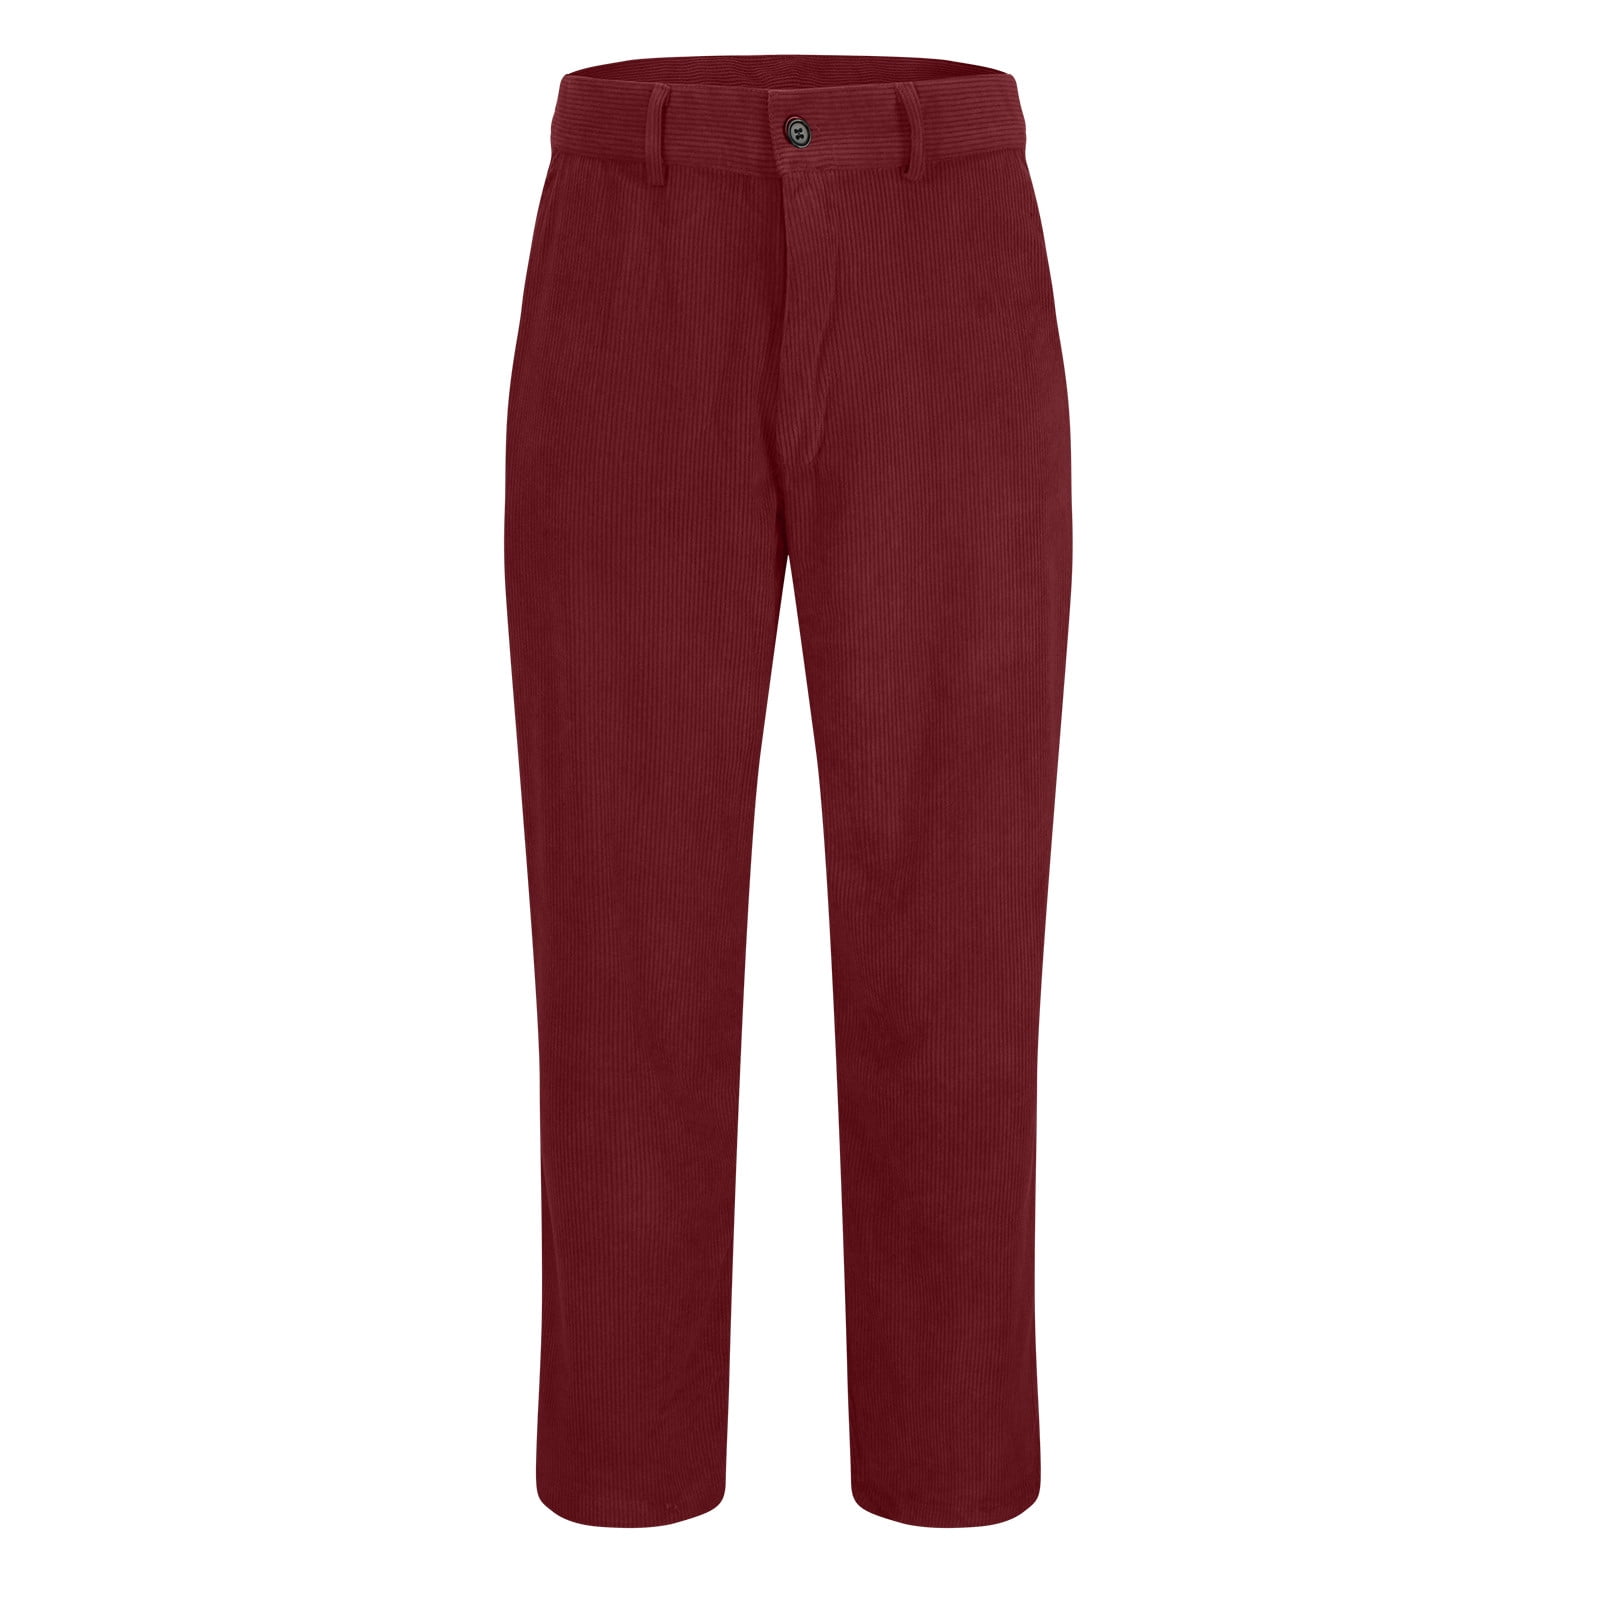 Cielo Jeans, Pants & Jumpsuits, Burgundy Red Corduroy Pants